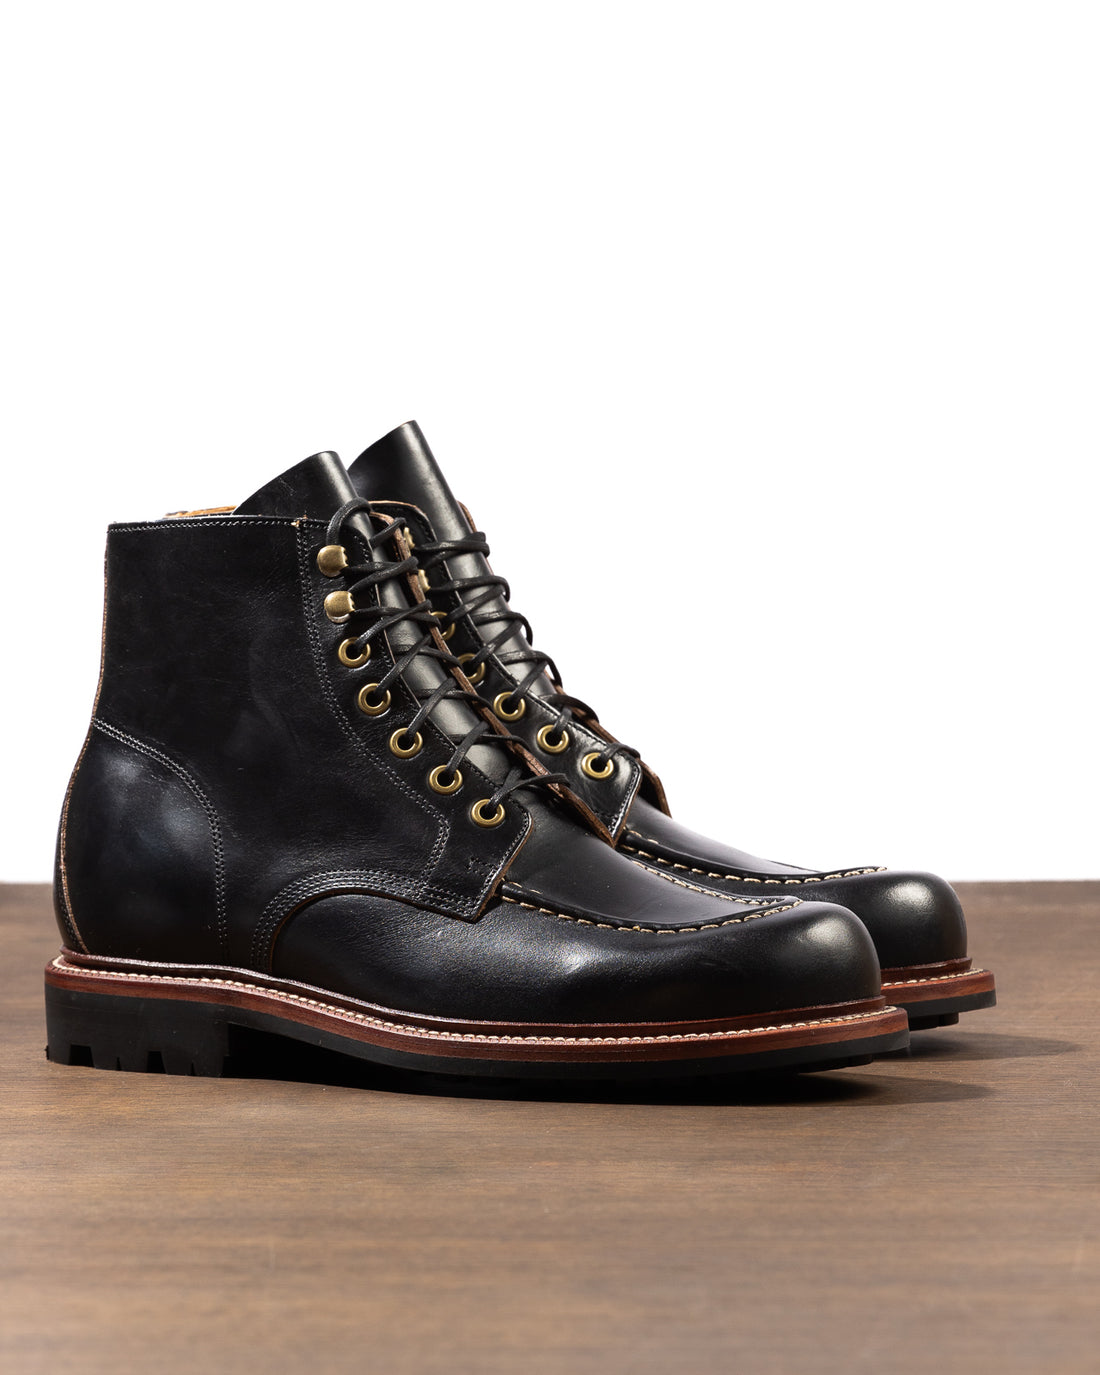 Grant Stone Boots Brass Boot - Black CXL - Standard & Strange